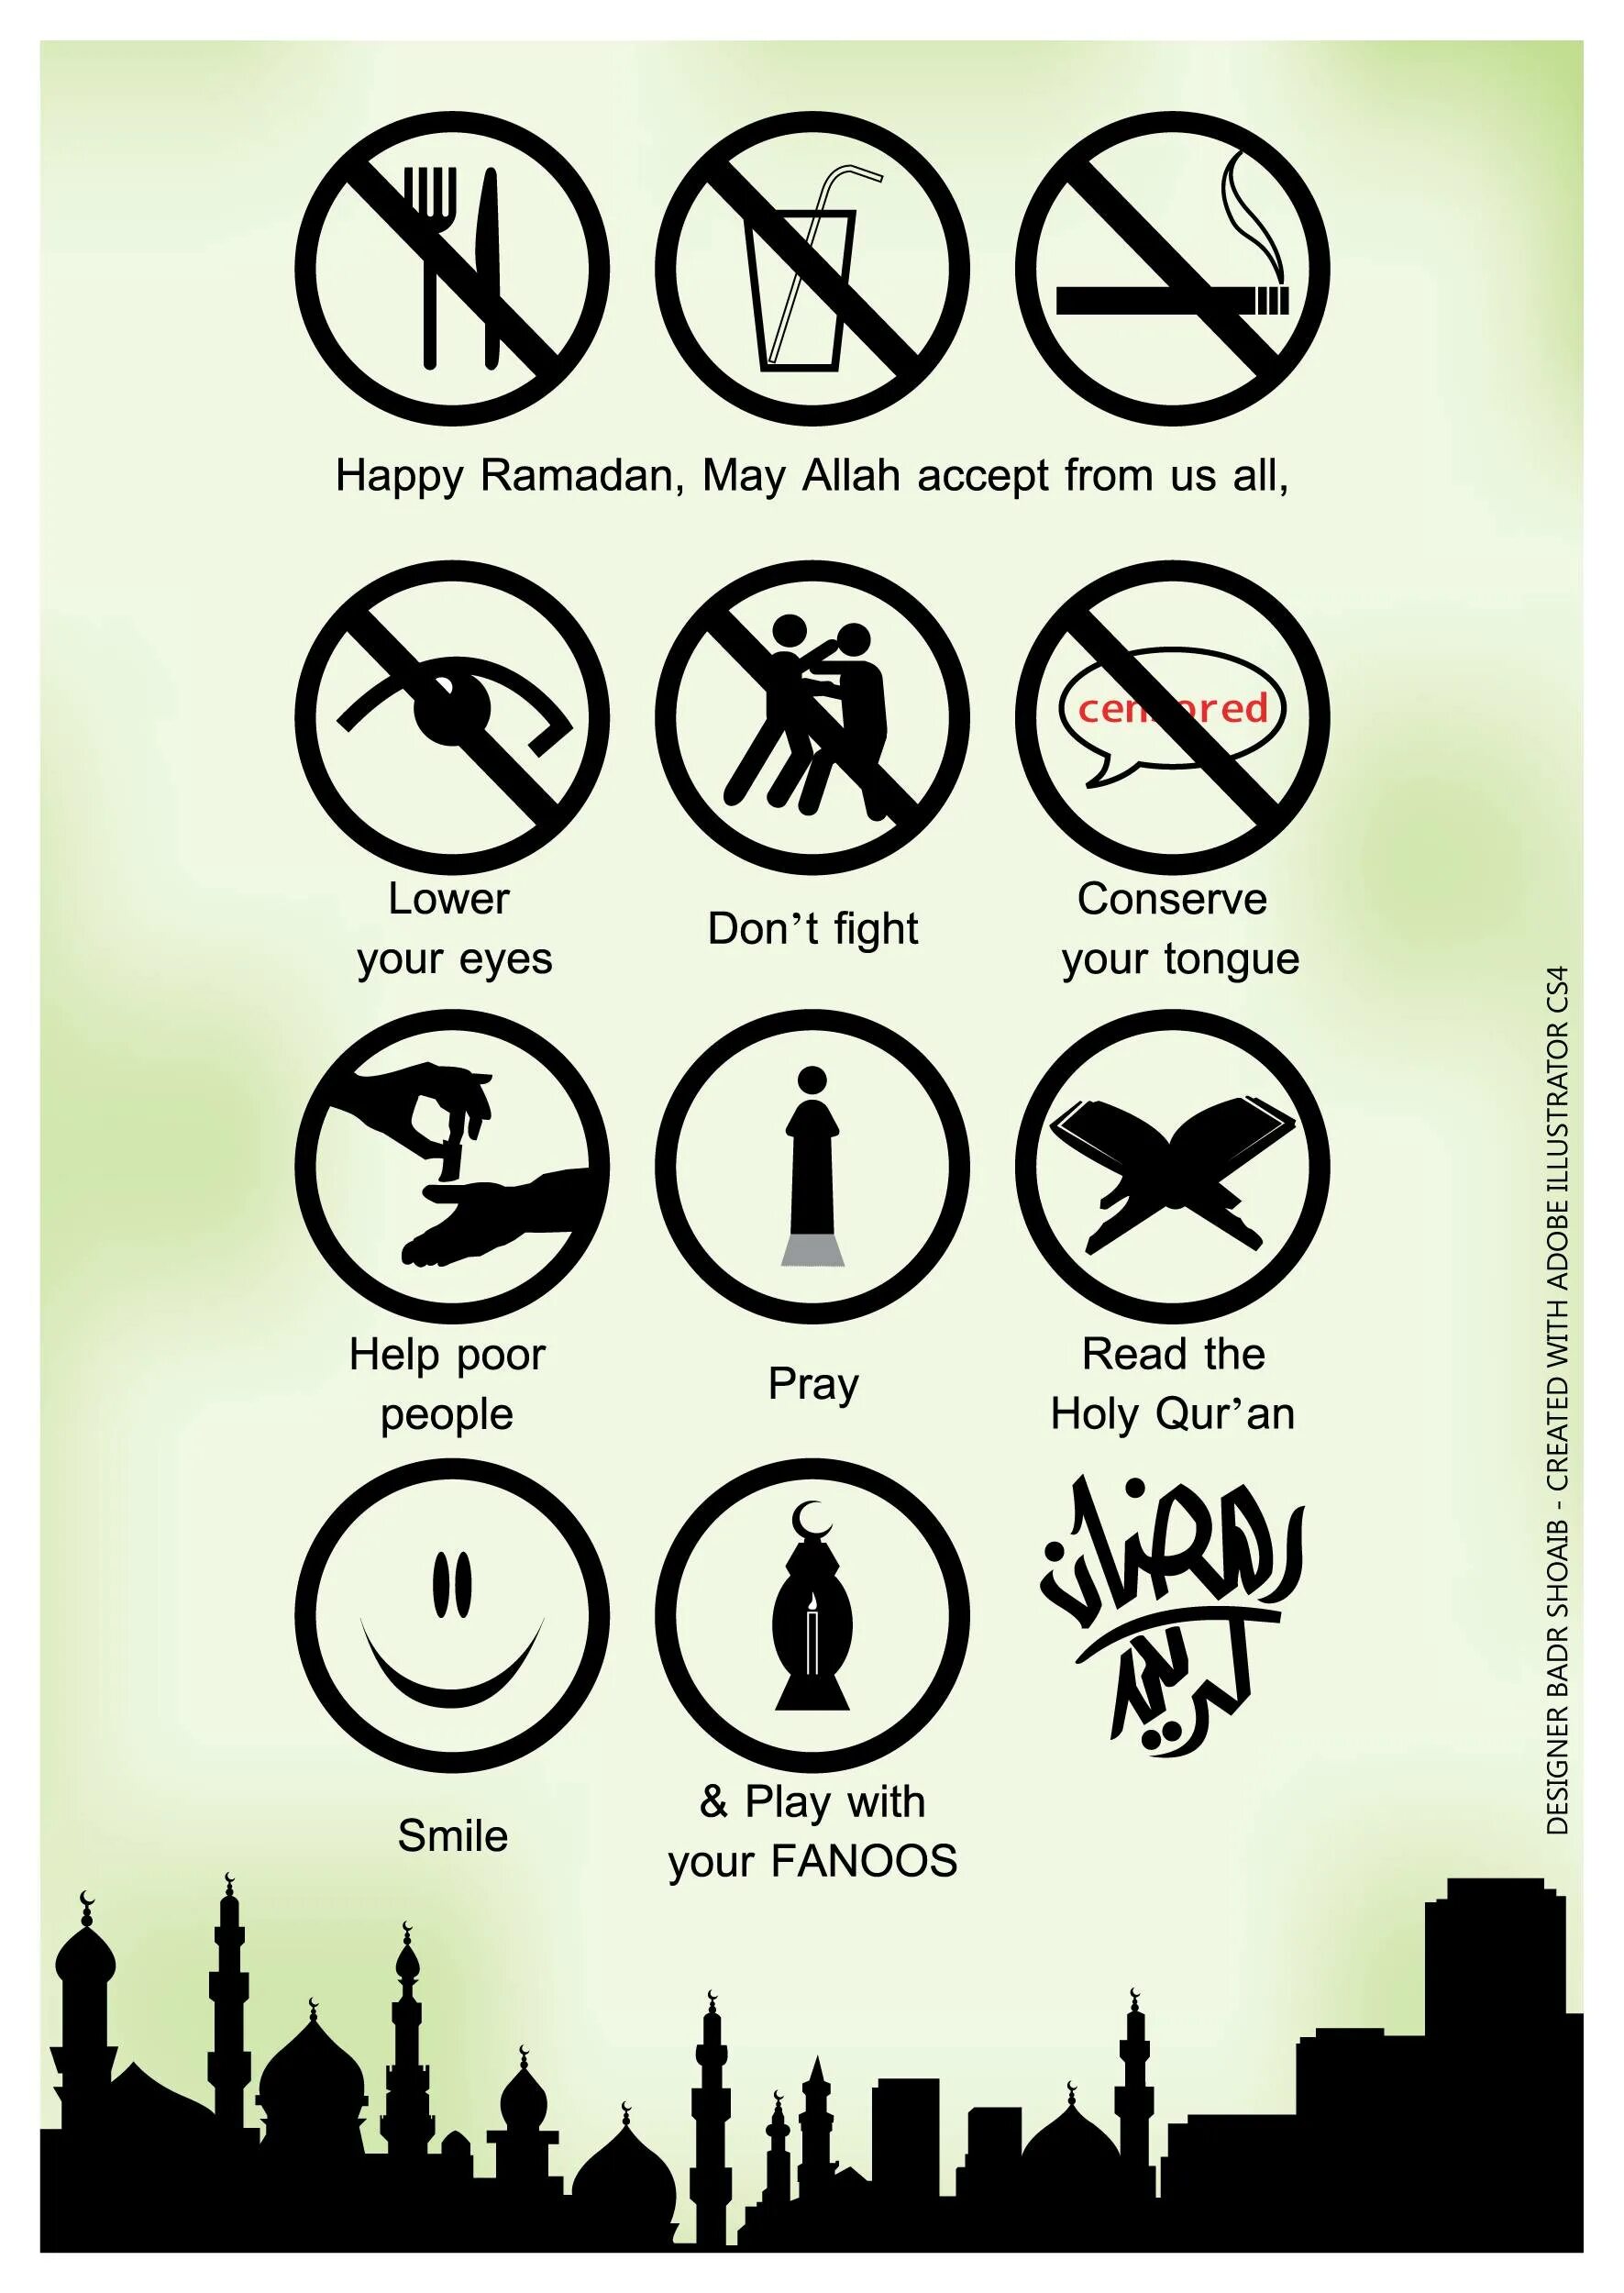 Рамадан. Что запрещено делать в Рамадан. Что запрещено делать в месяц Рамадан. Запреты в Рамадан для мужчин.